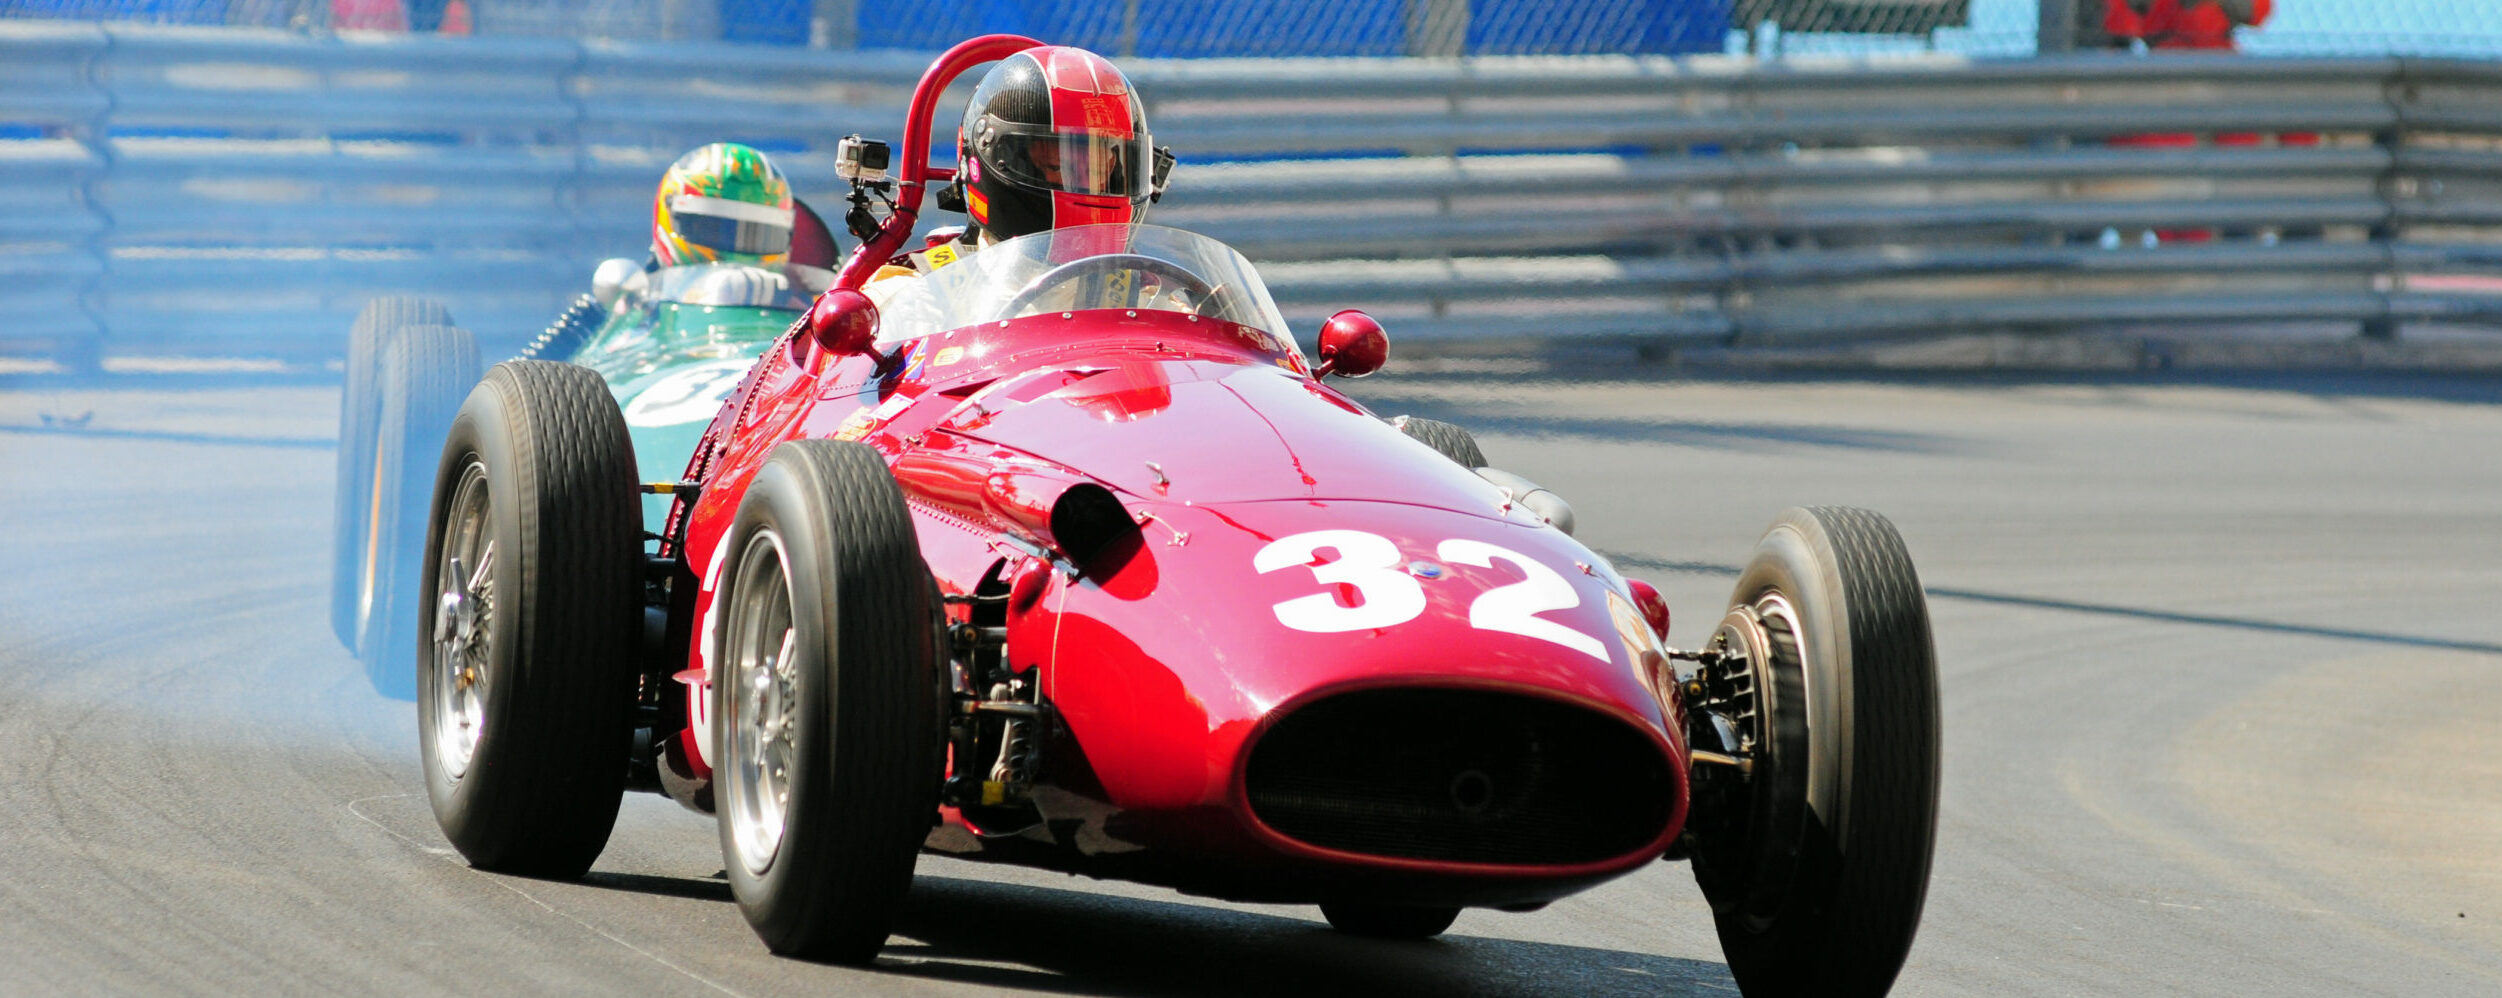 14th Grand Prix de Monaco Historique - Automobile Club de Monaco